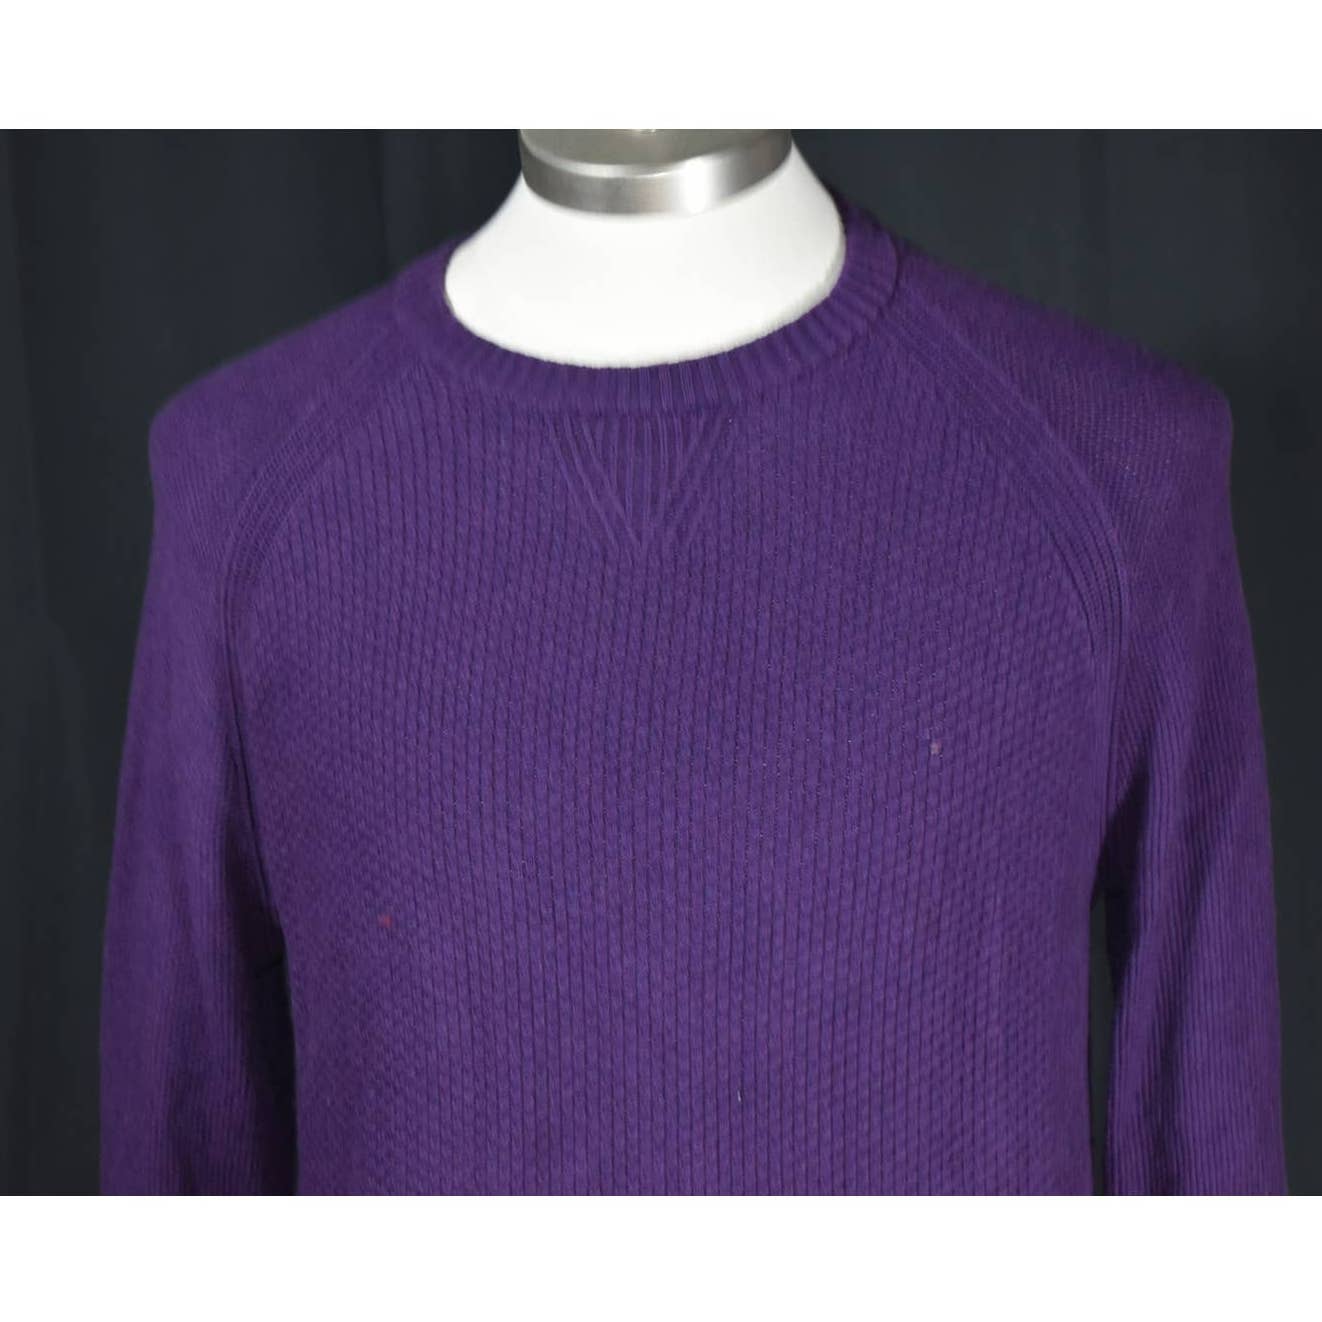 Ted Baker Knit Purple Crewneck Sweater - 4